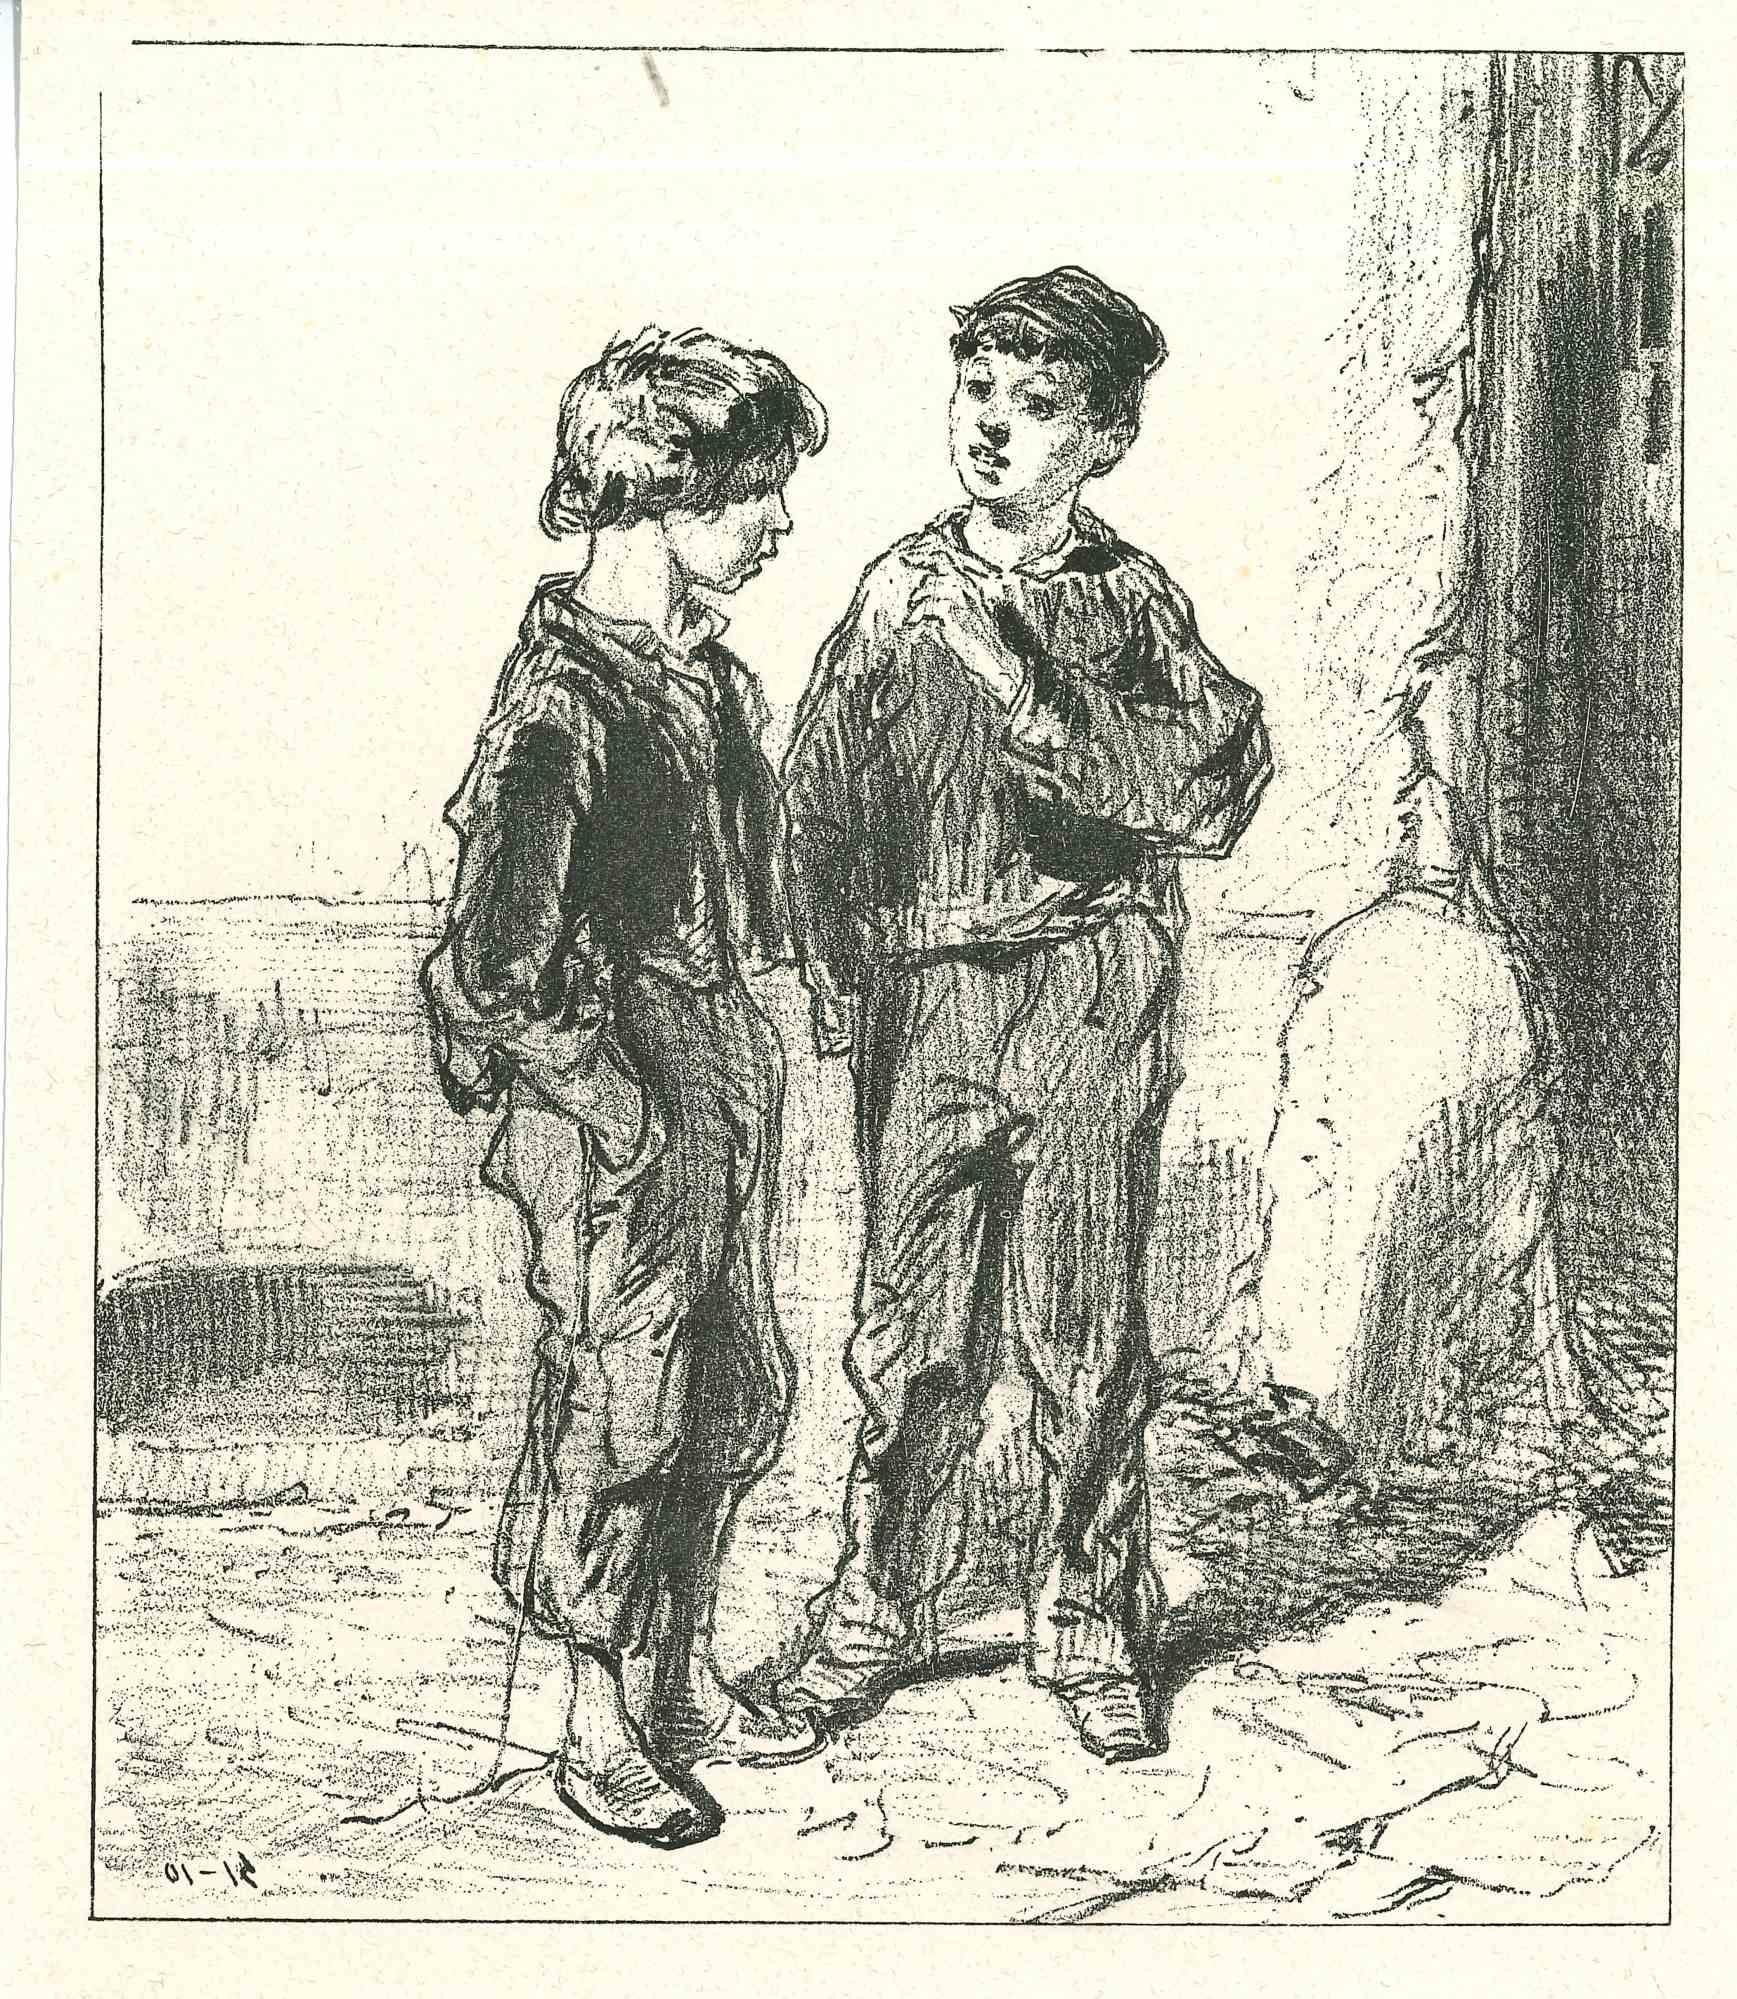 The Conversation - Original Lithograph by Paul Gavarni - 1881